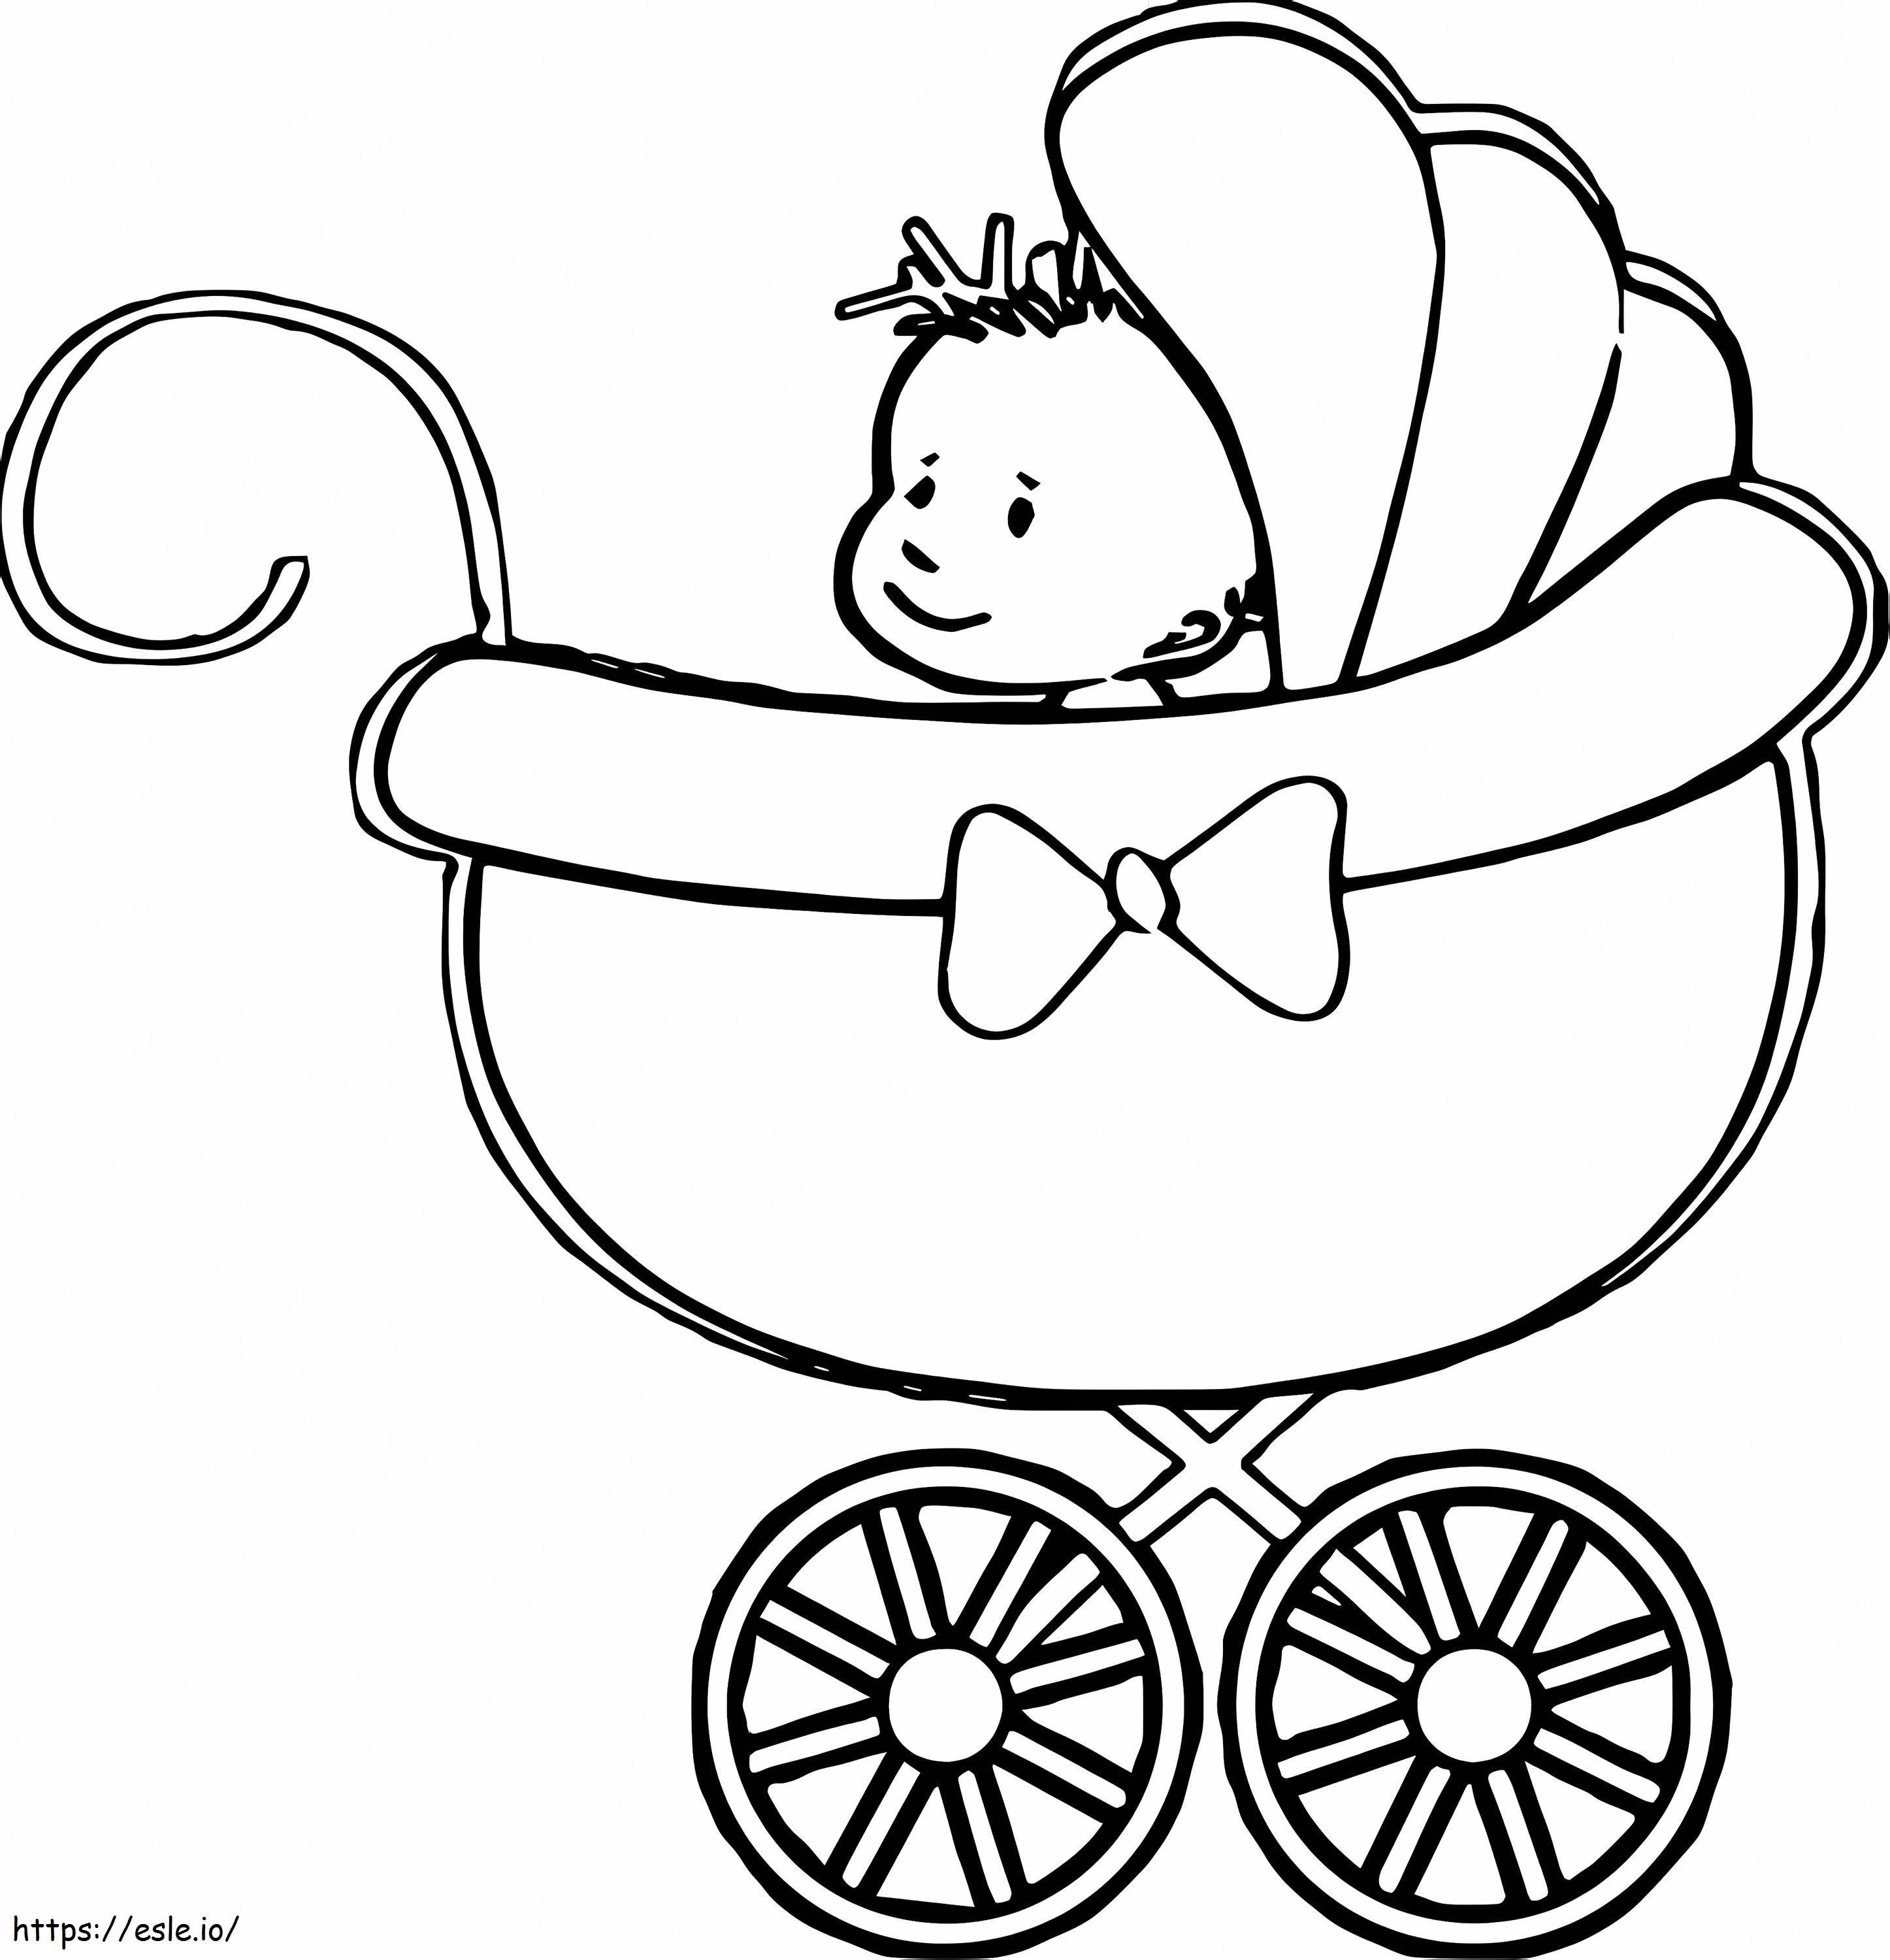 Halaman Mewarnai Bayi Di Stroller Gambar Mewarnai